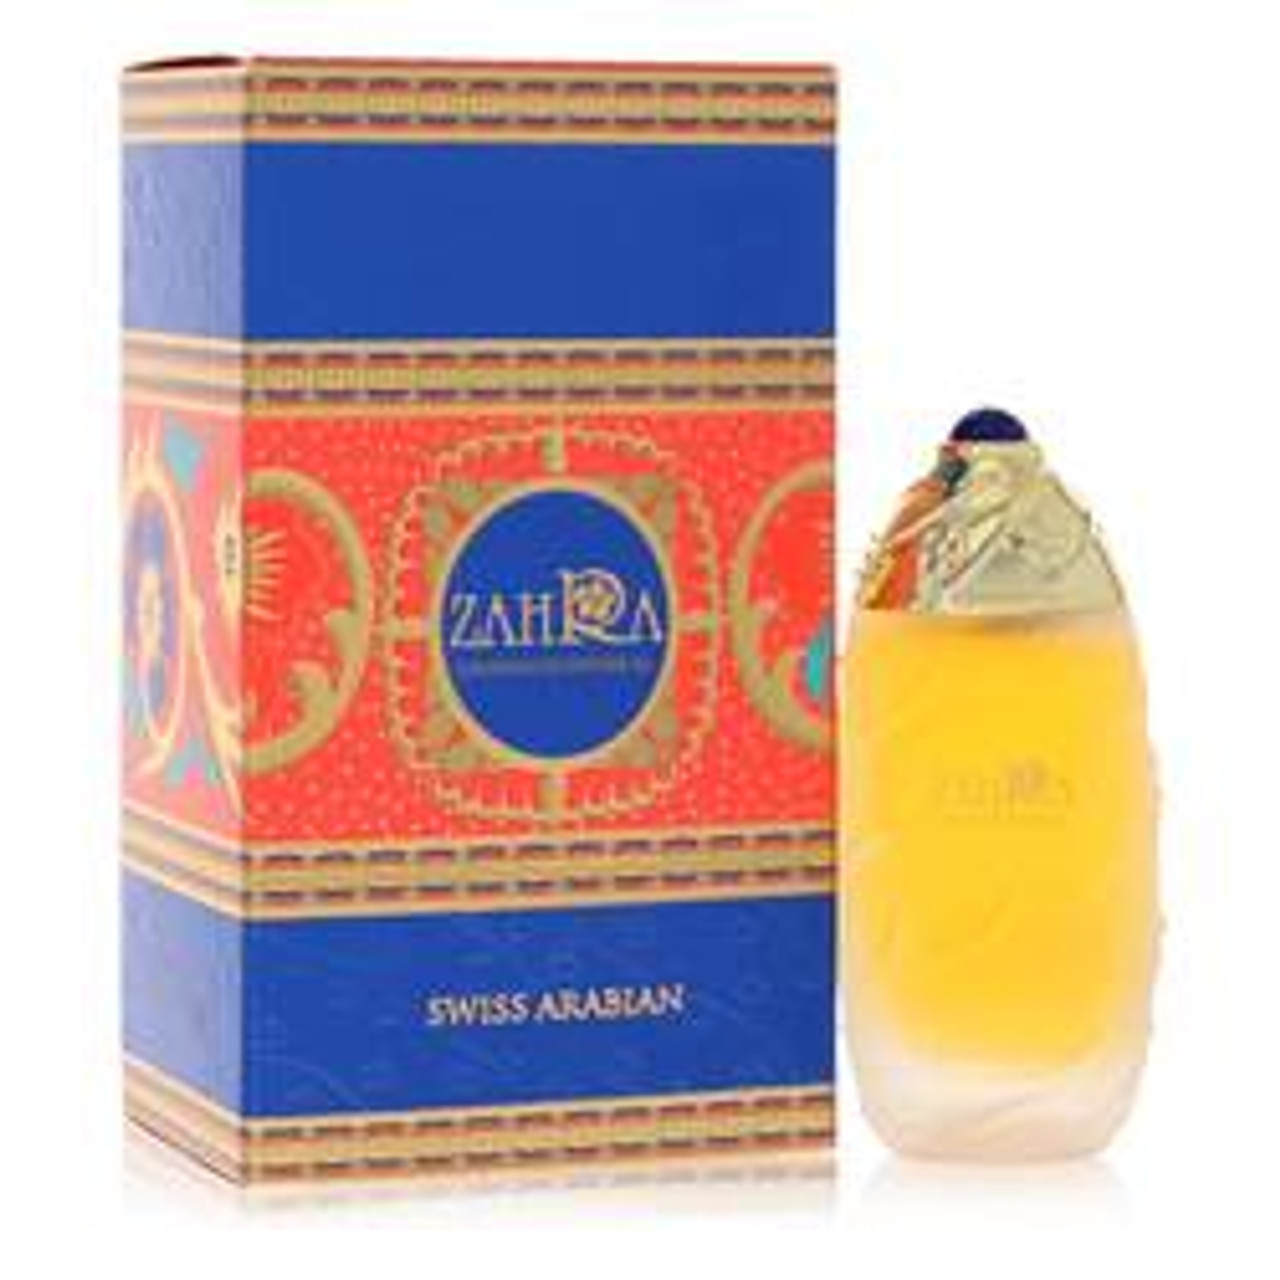 Swiss Arabian Zahra Perfume By Swiss Arabian Perfume Oil 1 oz for Women - [From 83.00 - Choose pk Qty ] - *Ships from Miami